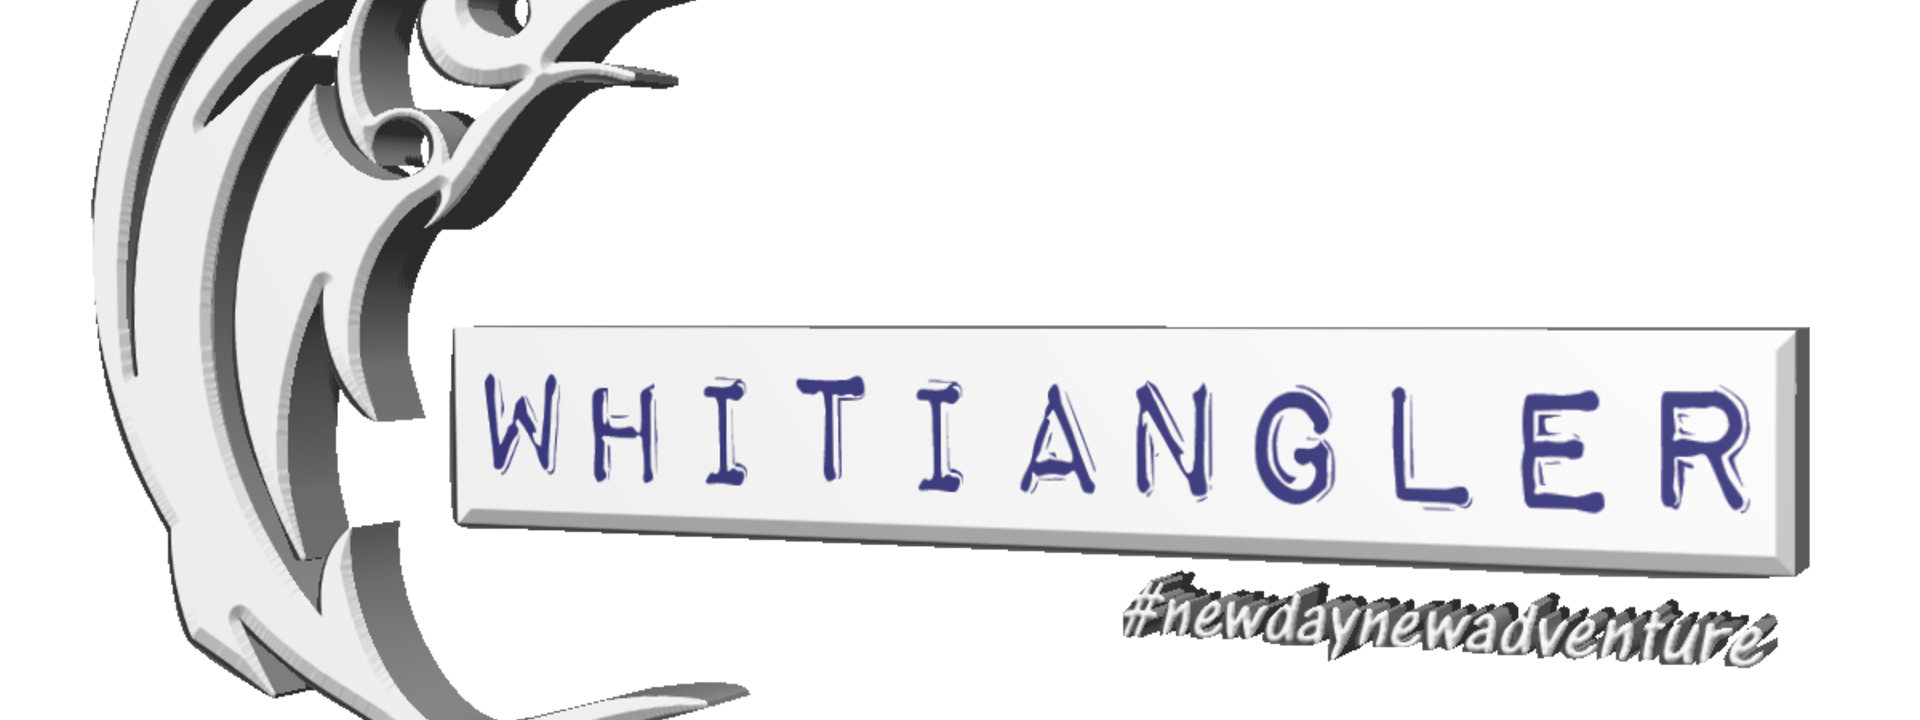 whitiangler-logo-3d.png